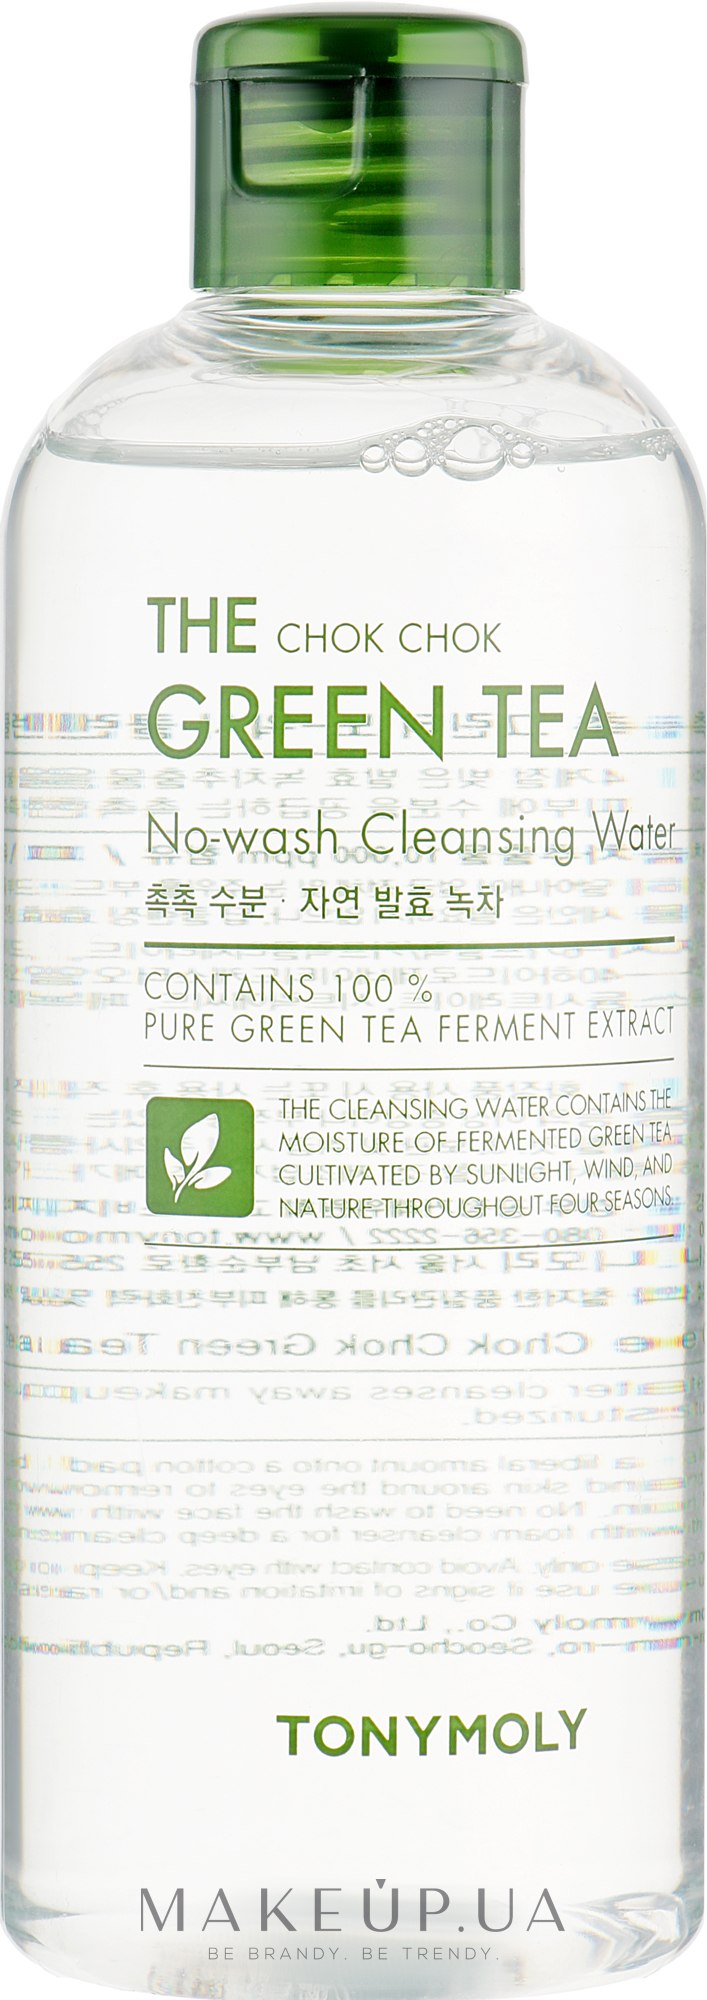 Очищающая вода для лица - Tony Moly The Chok Chok Green Tea No-Wash Cleansing Water  — фото 300ml